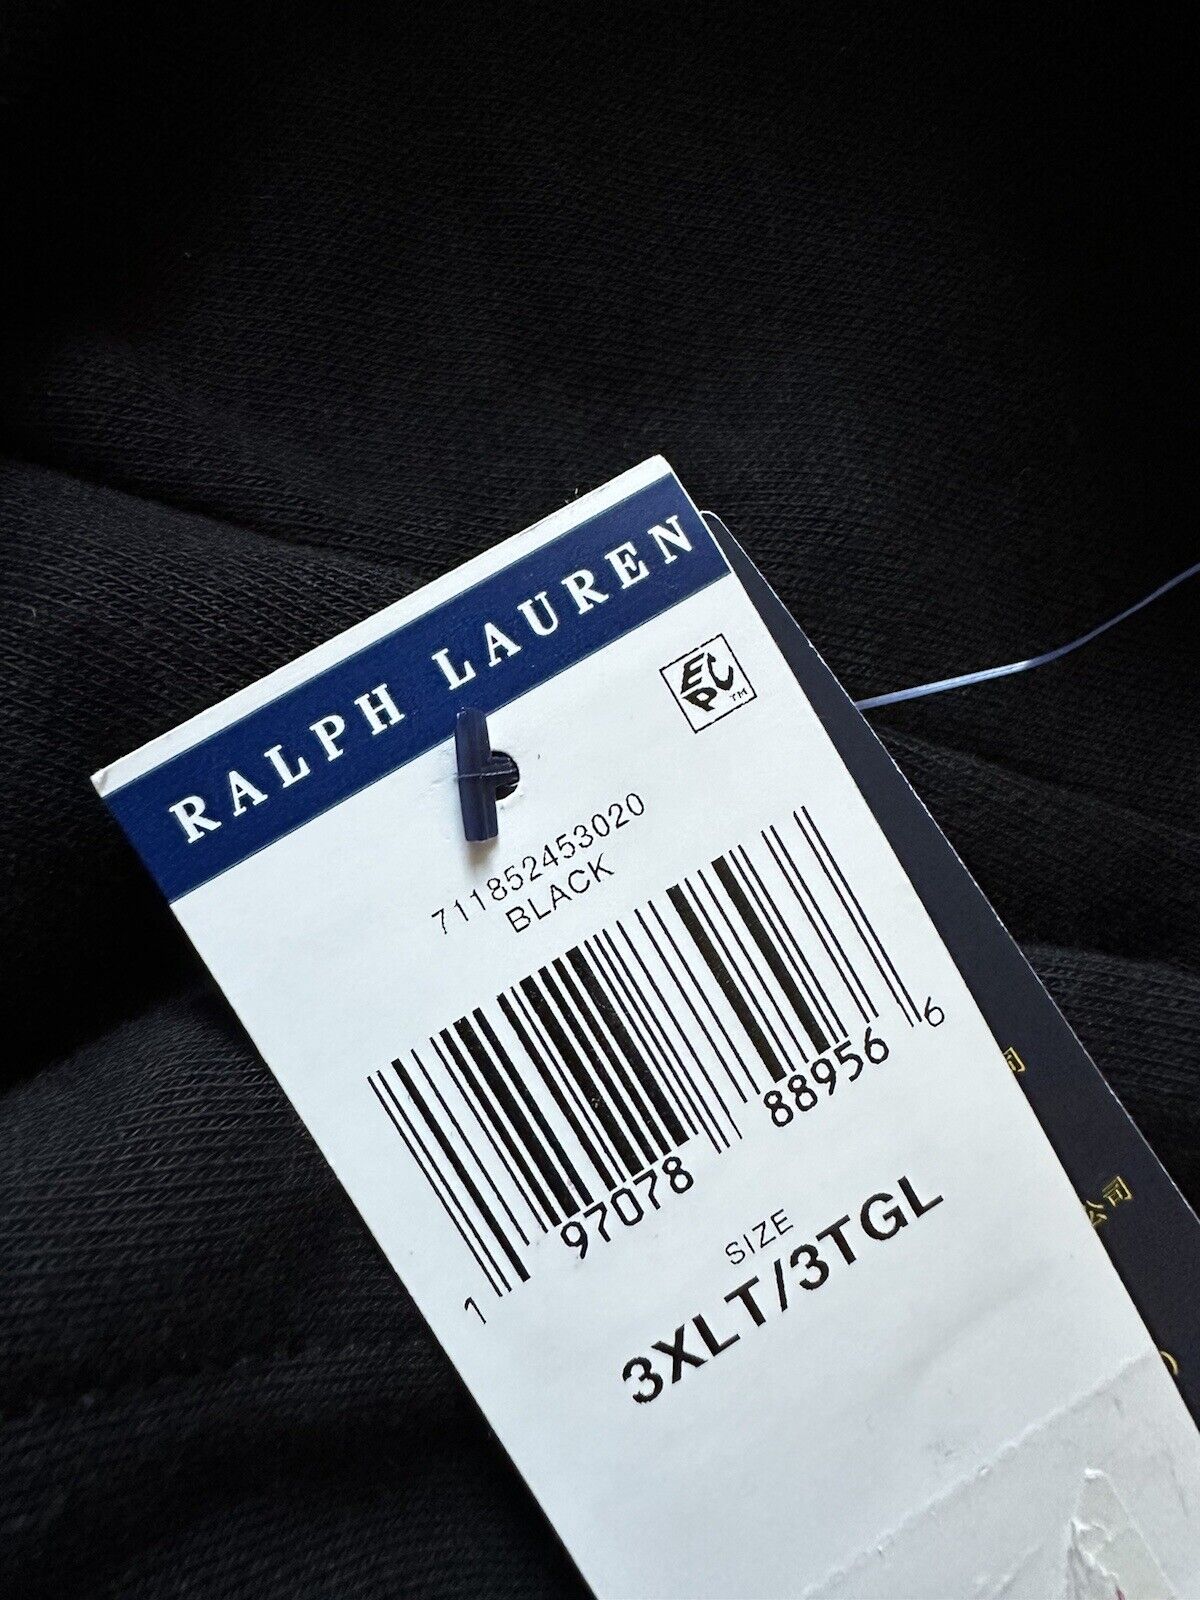 NWT $188 Polo Ralph Lauren Holiday Bear Sweatshirt with Hoodie Black 3XLT/3TGL